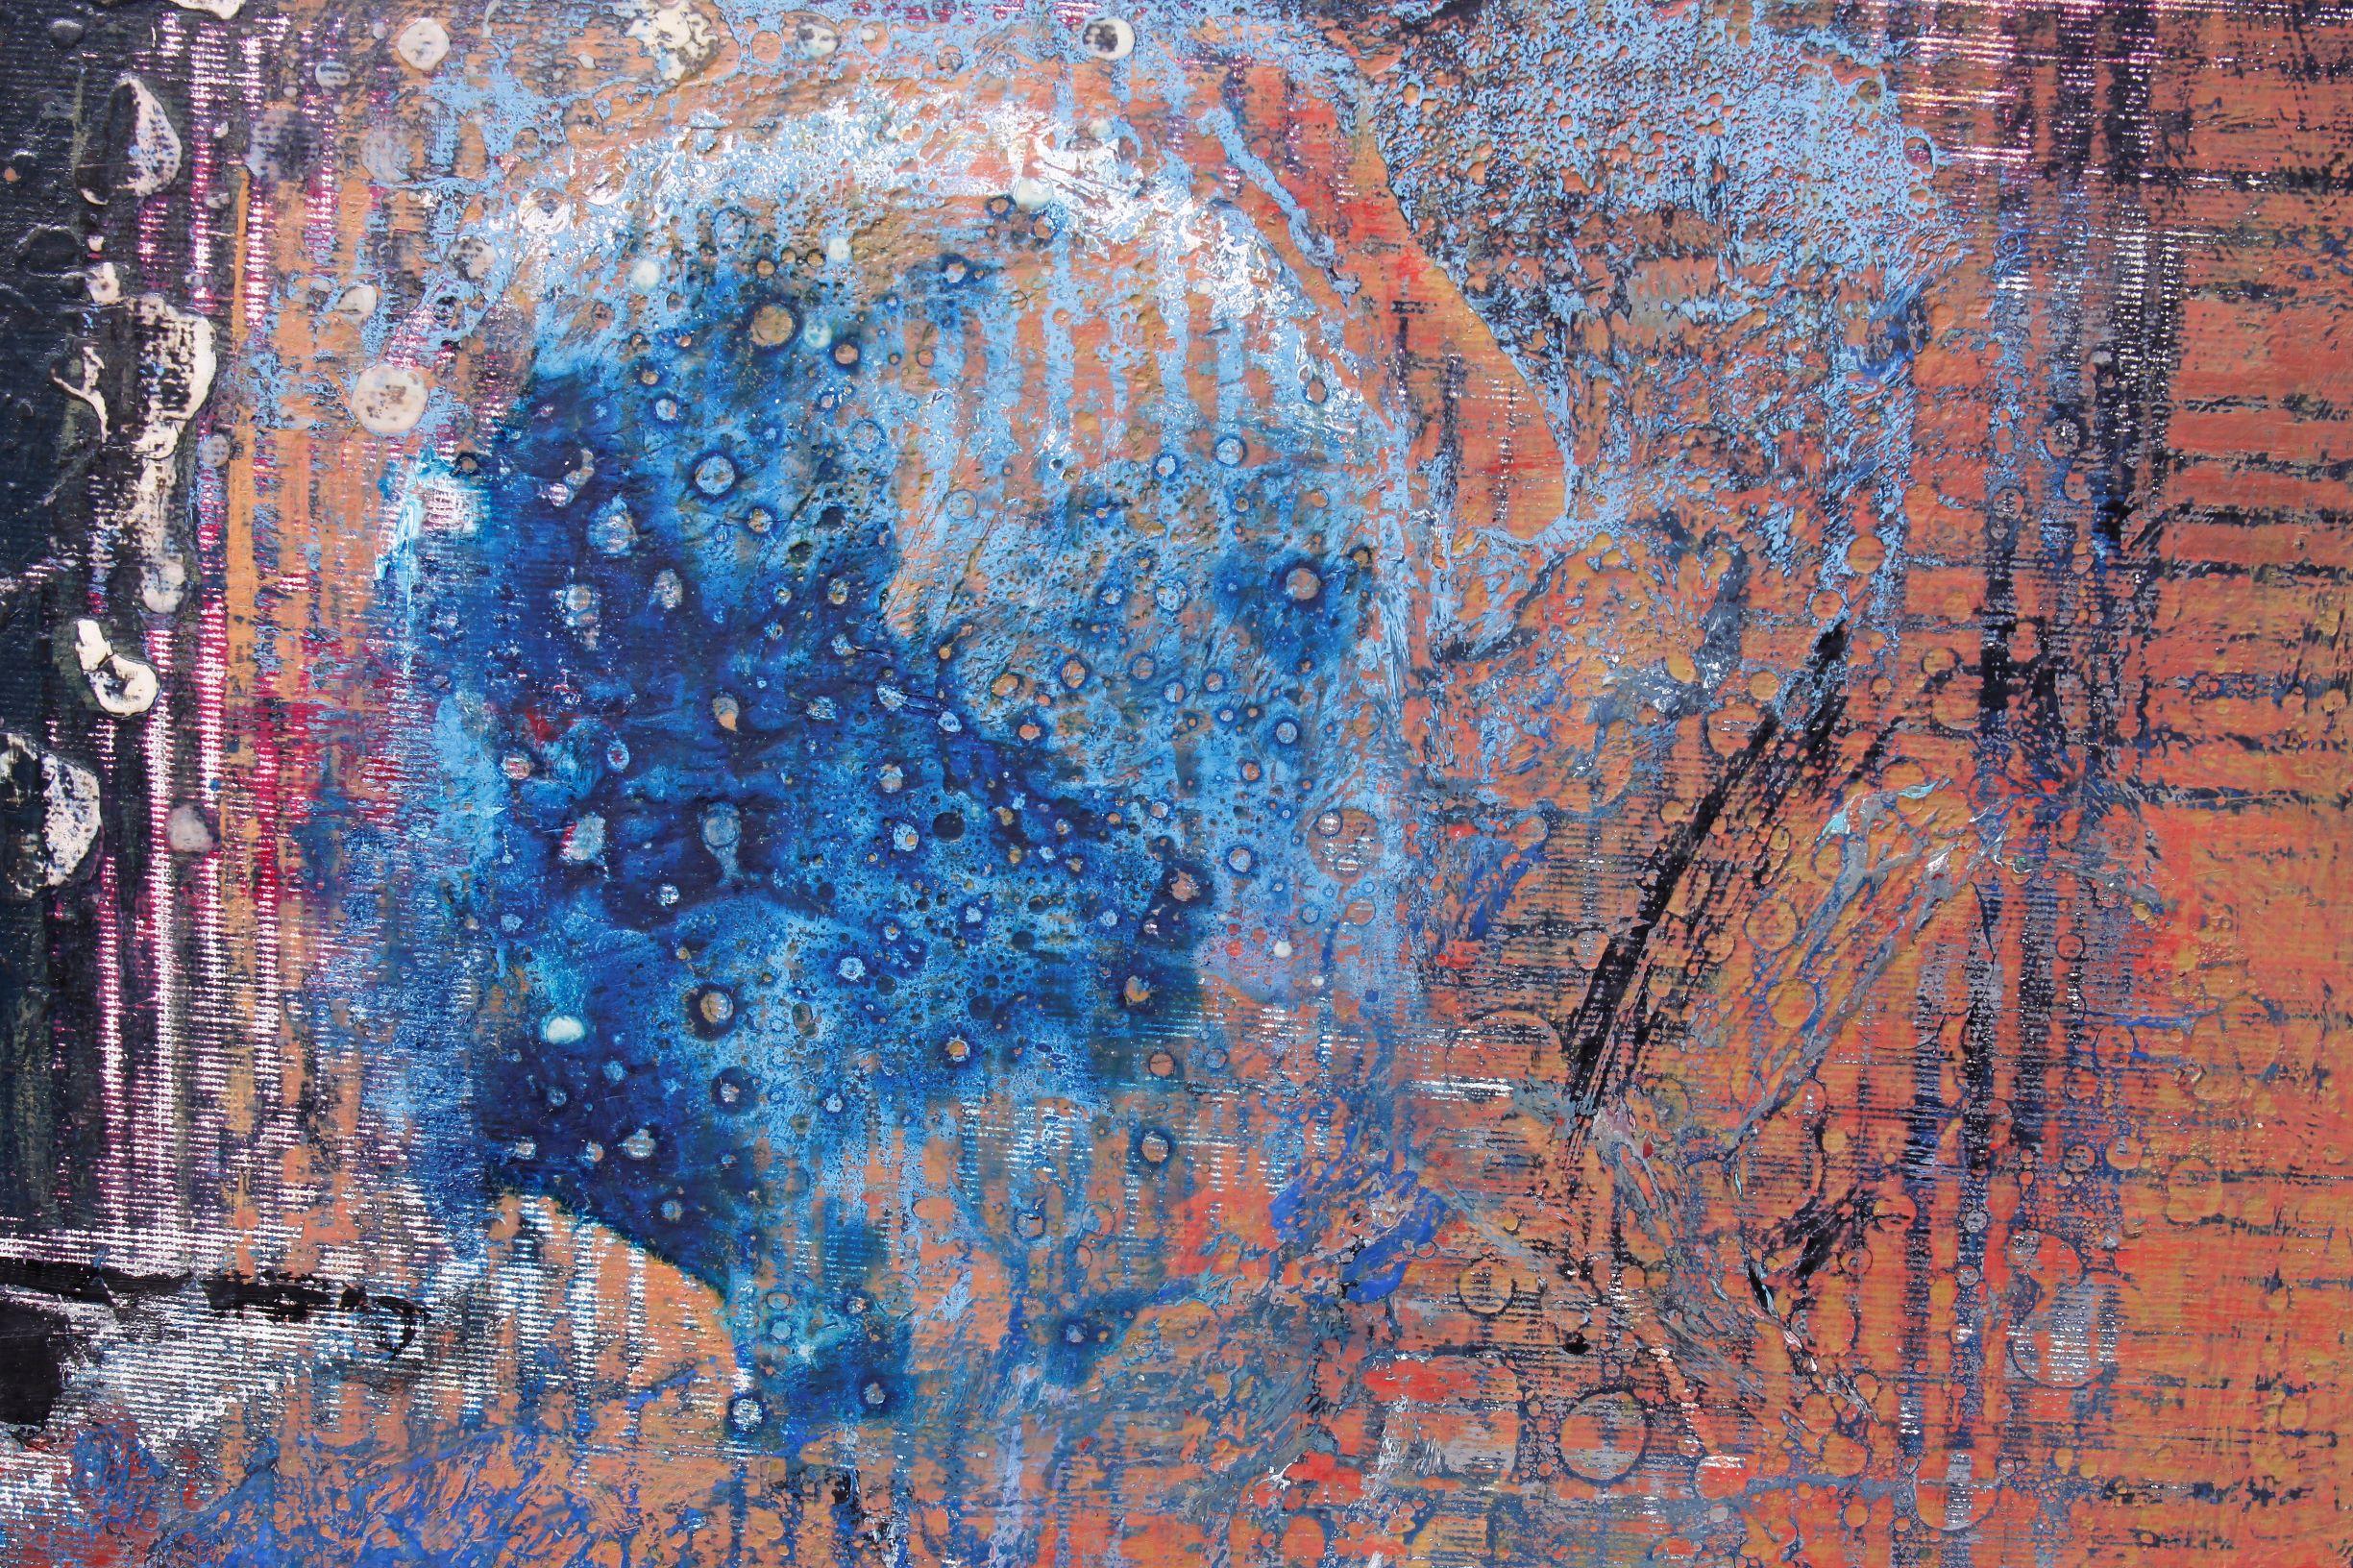 Fisherman III - peinture abstraite marron, orange, bleu, gris, noir, blanc et violet - Painting de Deyan Valkov